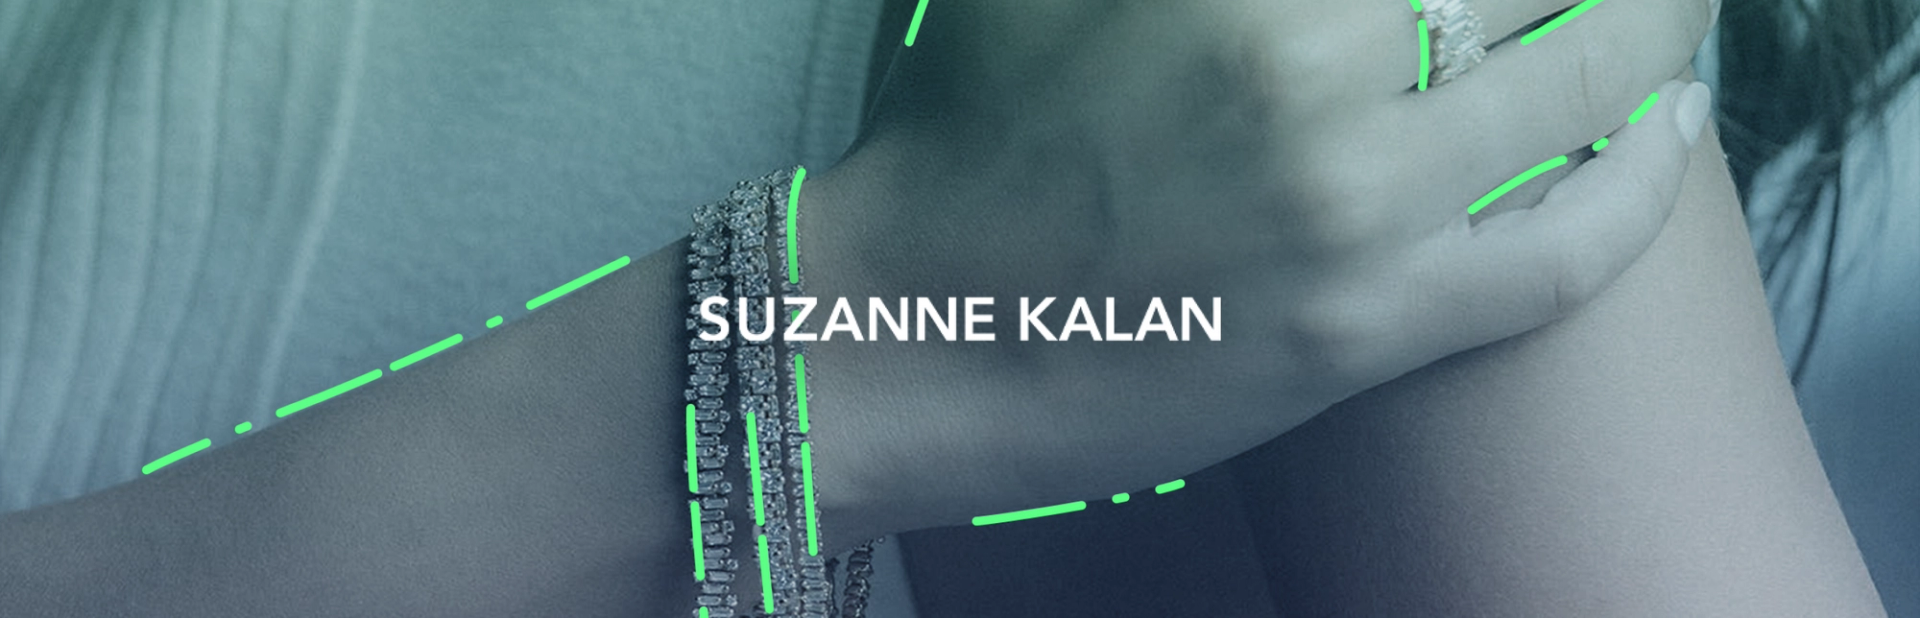 How Suzanne Kalan Captivated TikTok